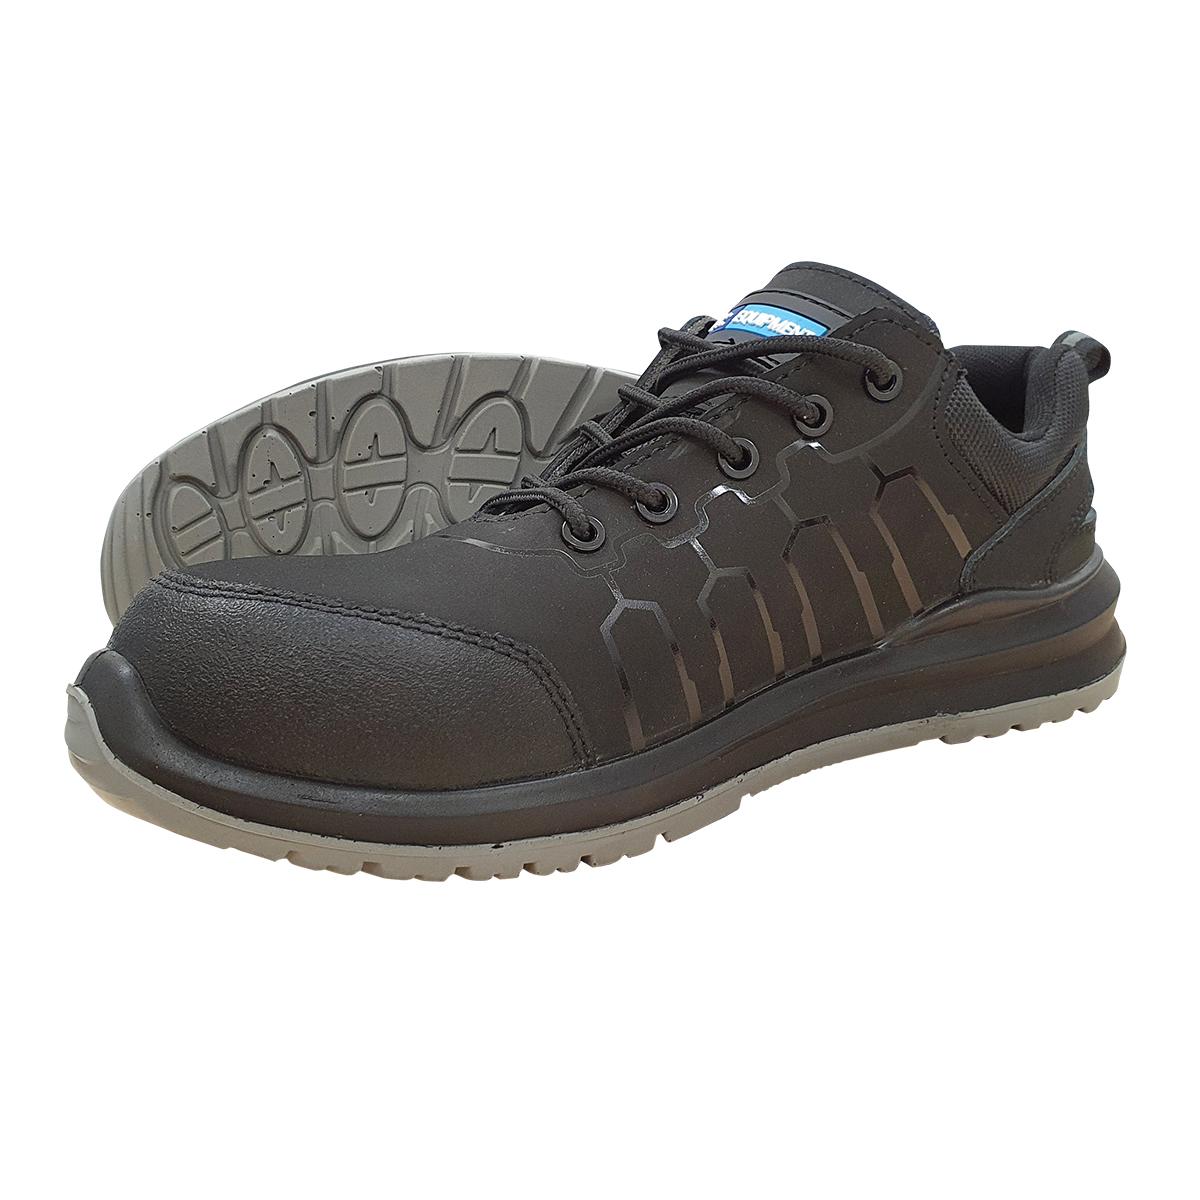 Pantofi protectie RTC, S3 ESD, Madeira, marime 39